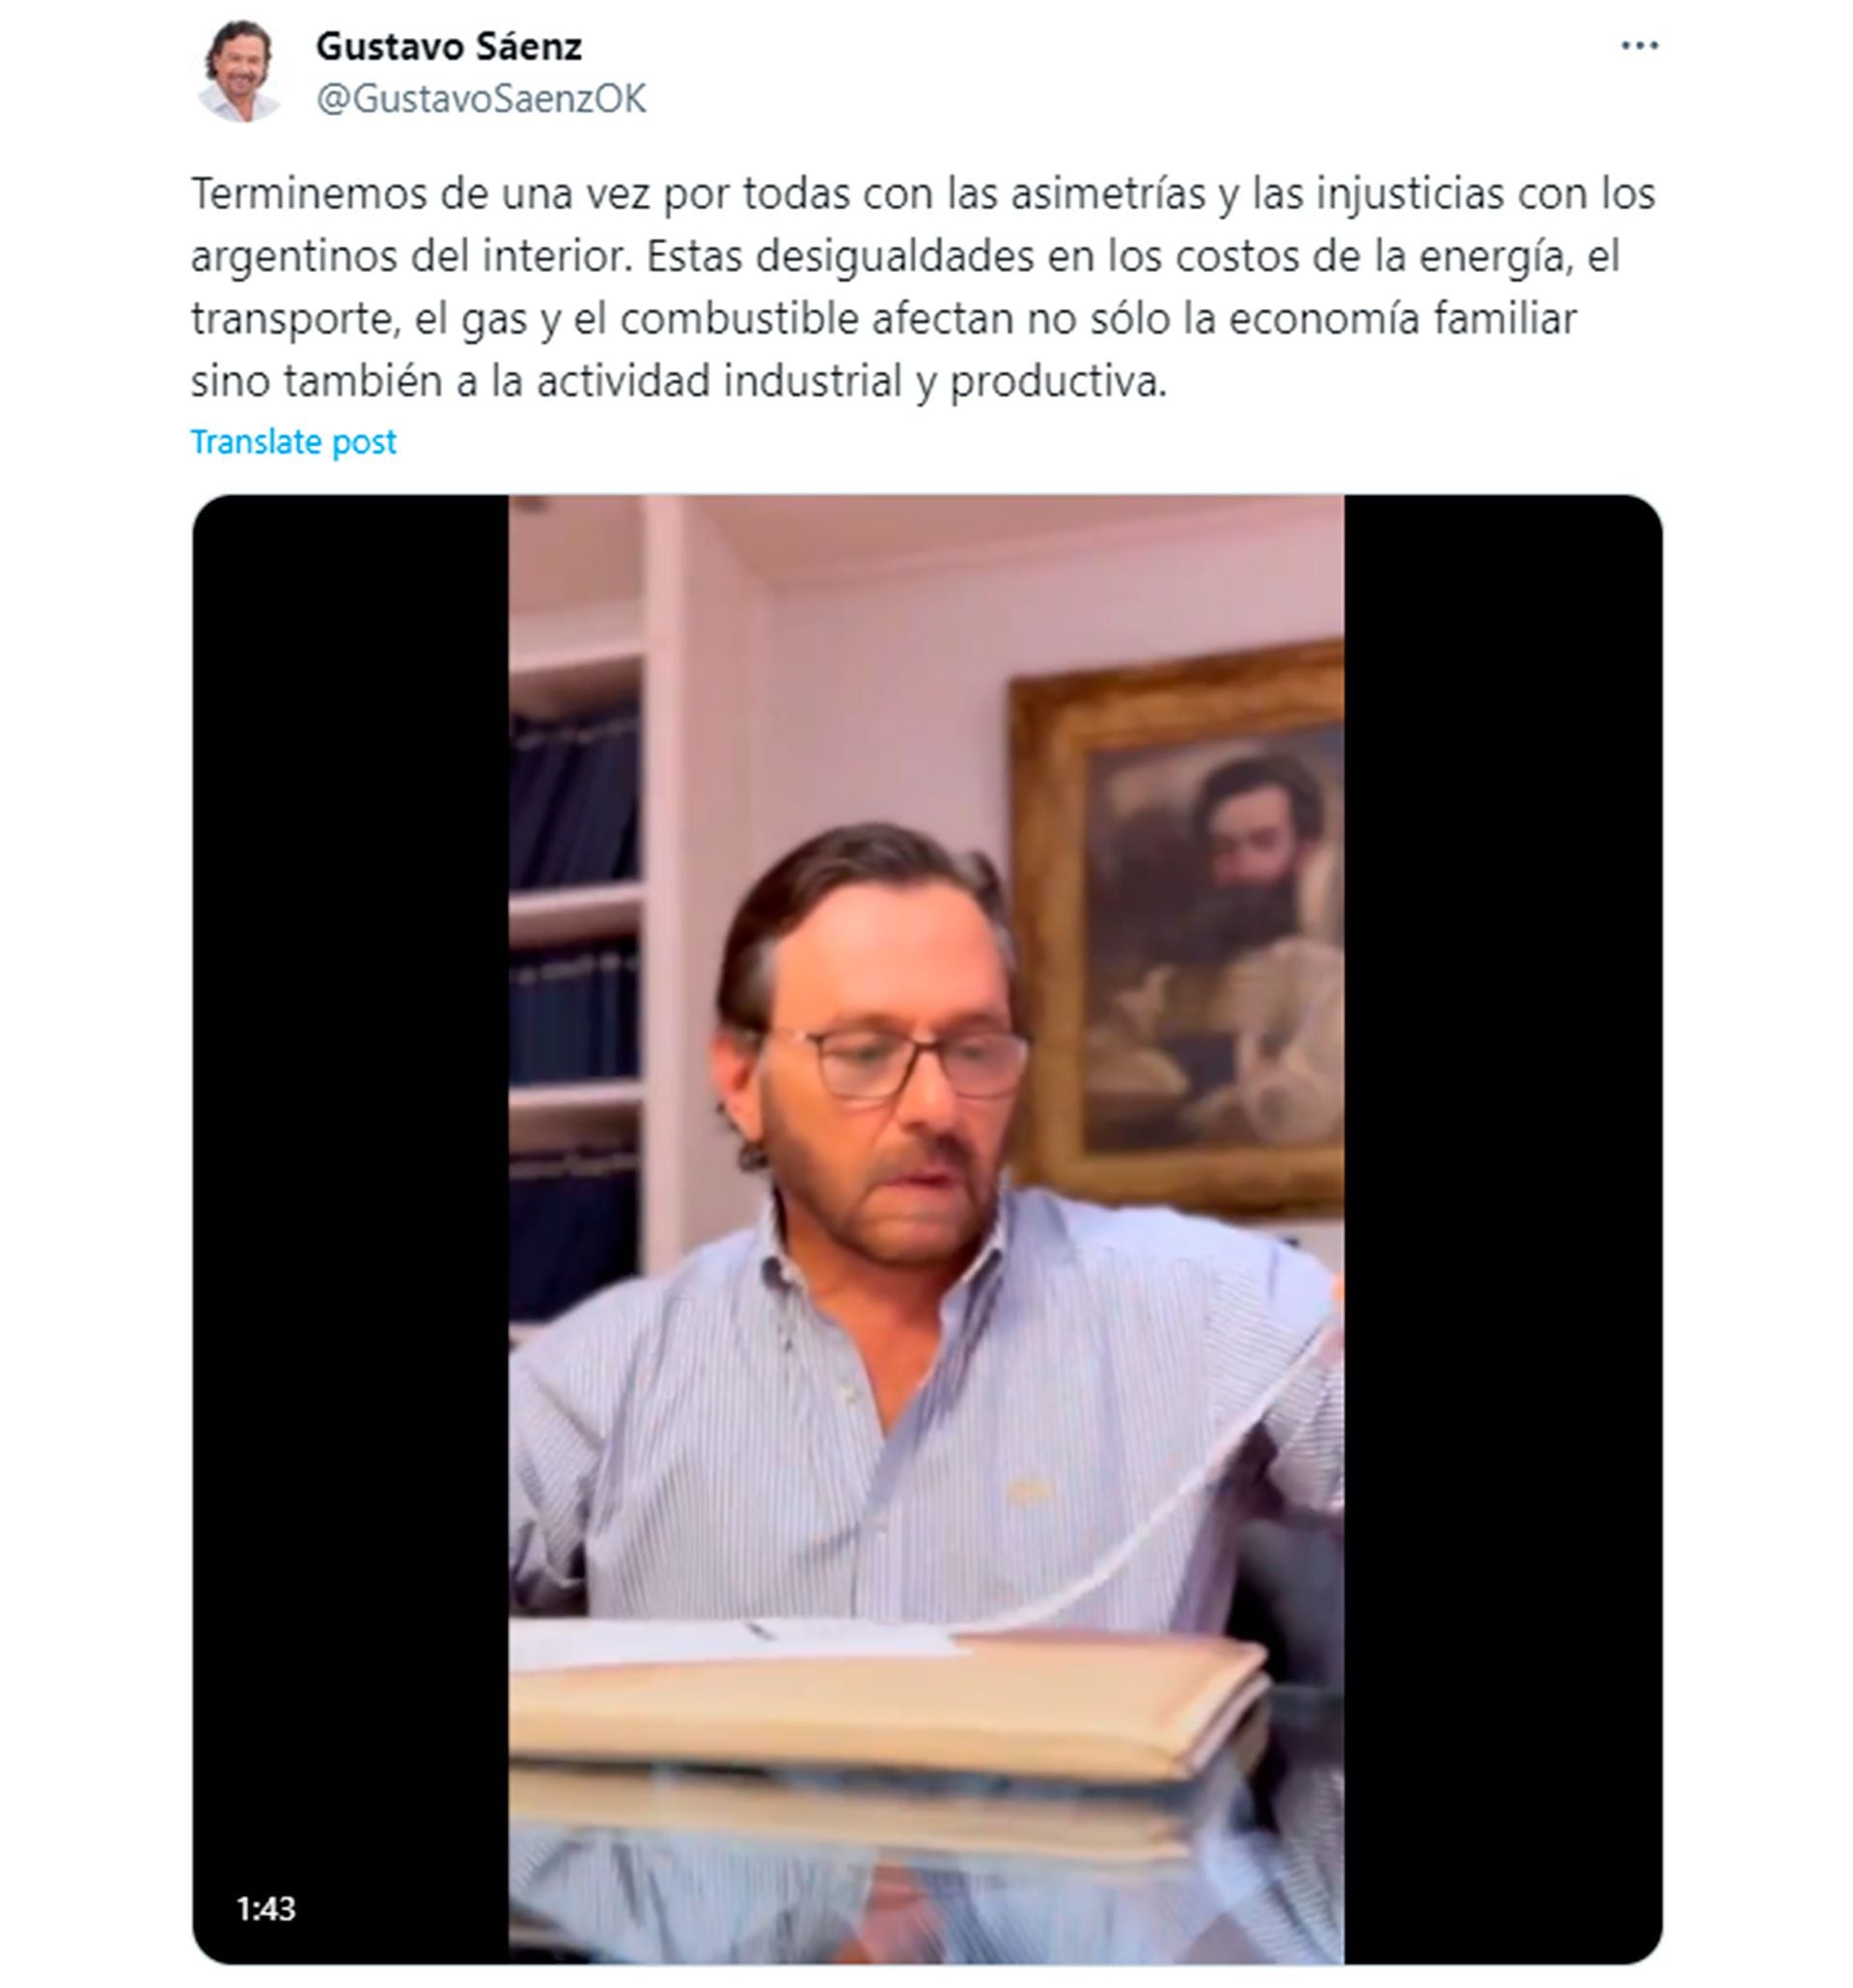 Mensaje del gobernador de Salta, Gustavo Sáenz